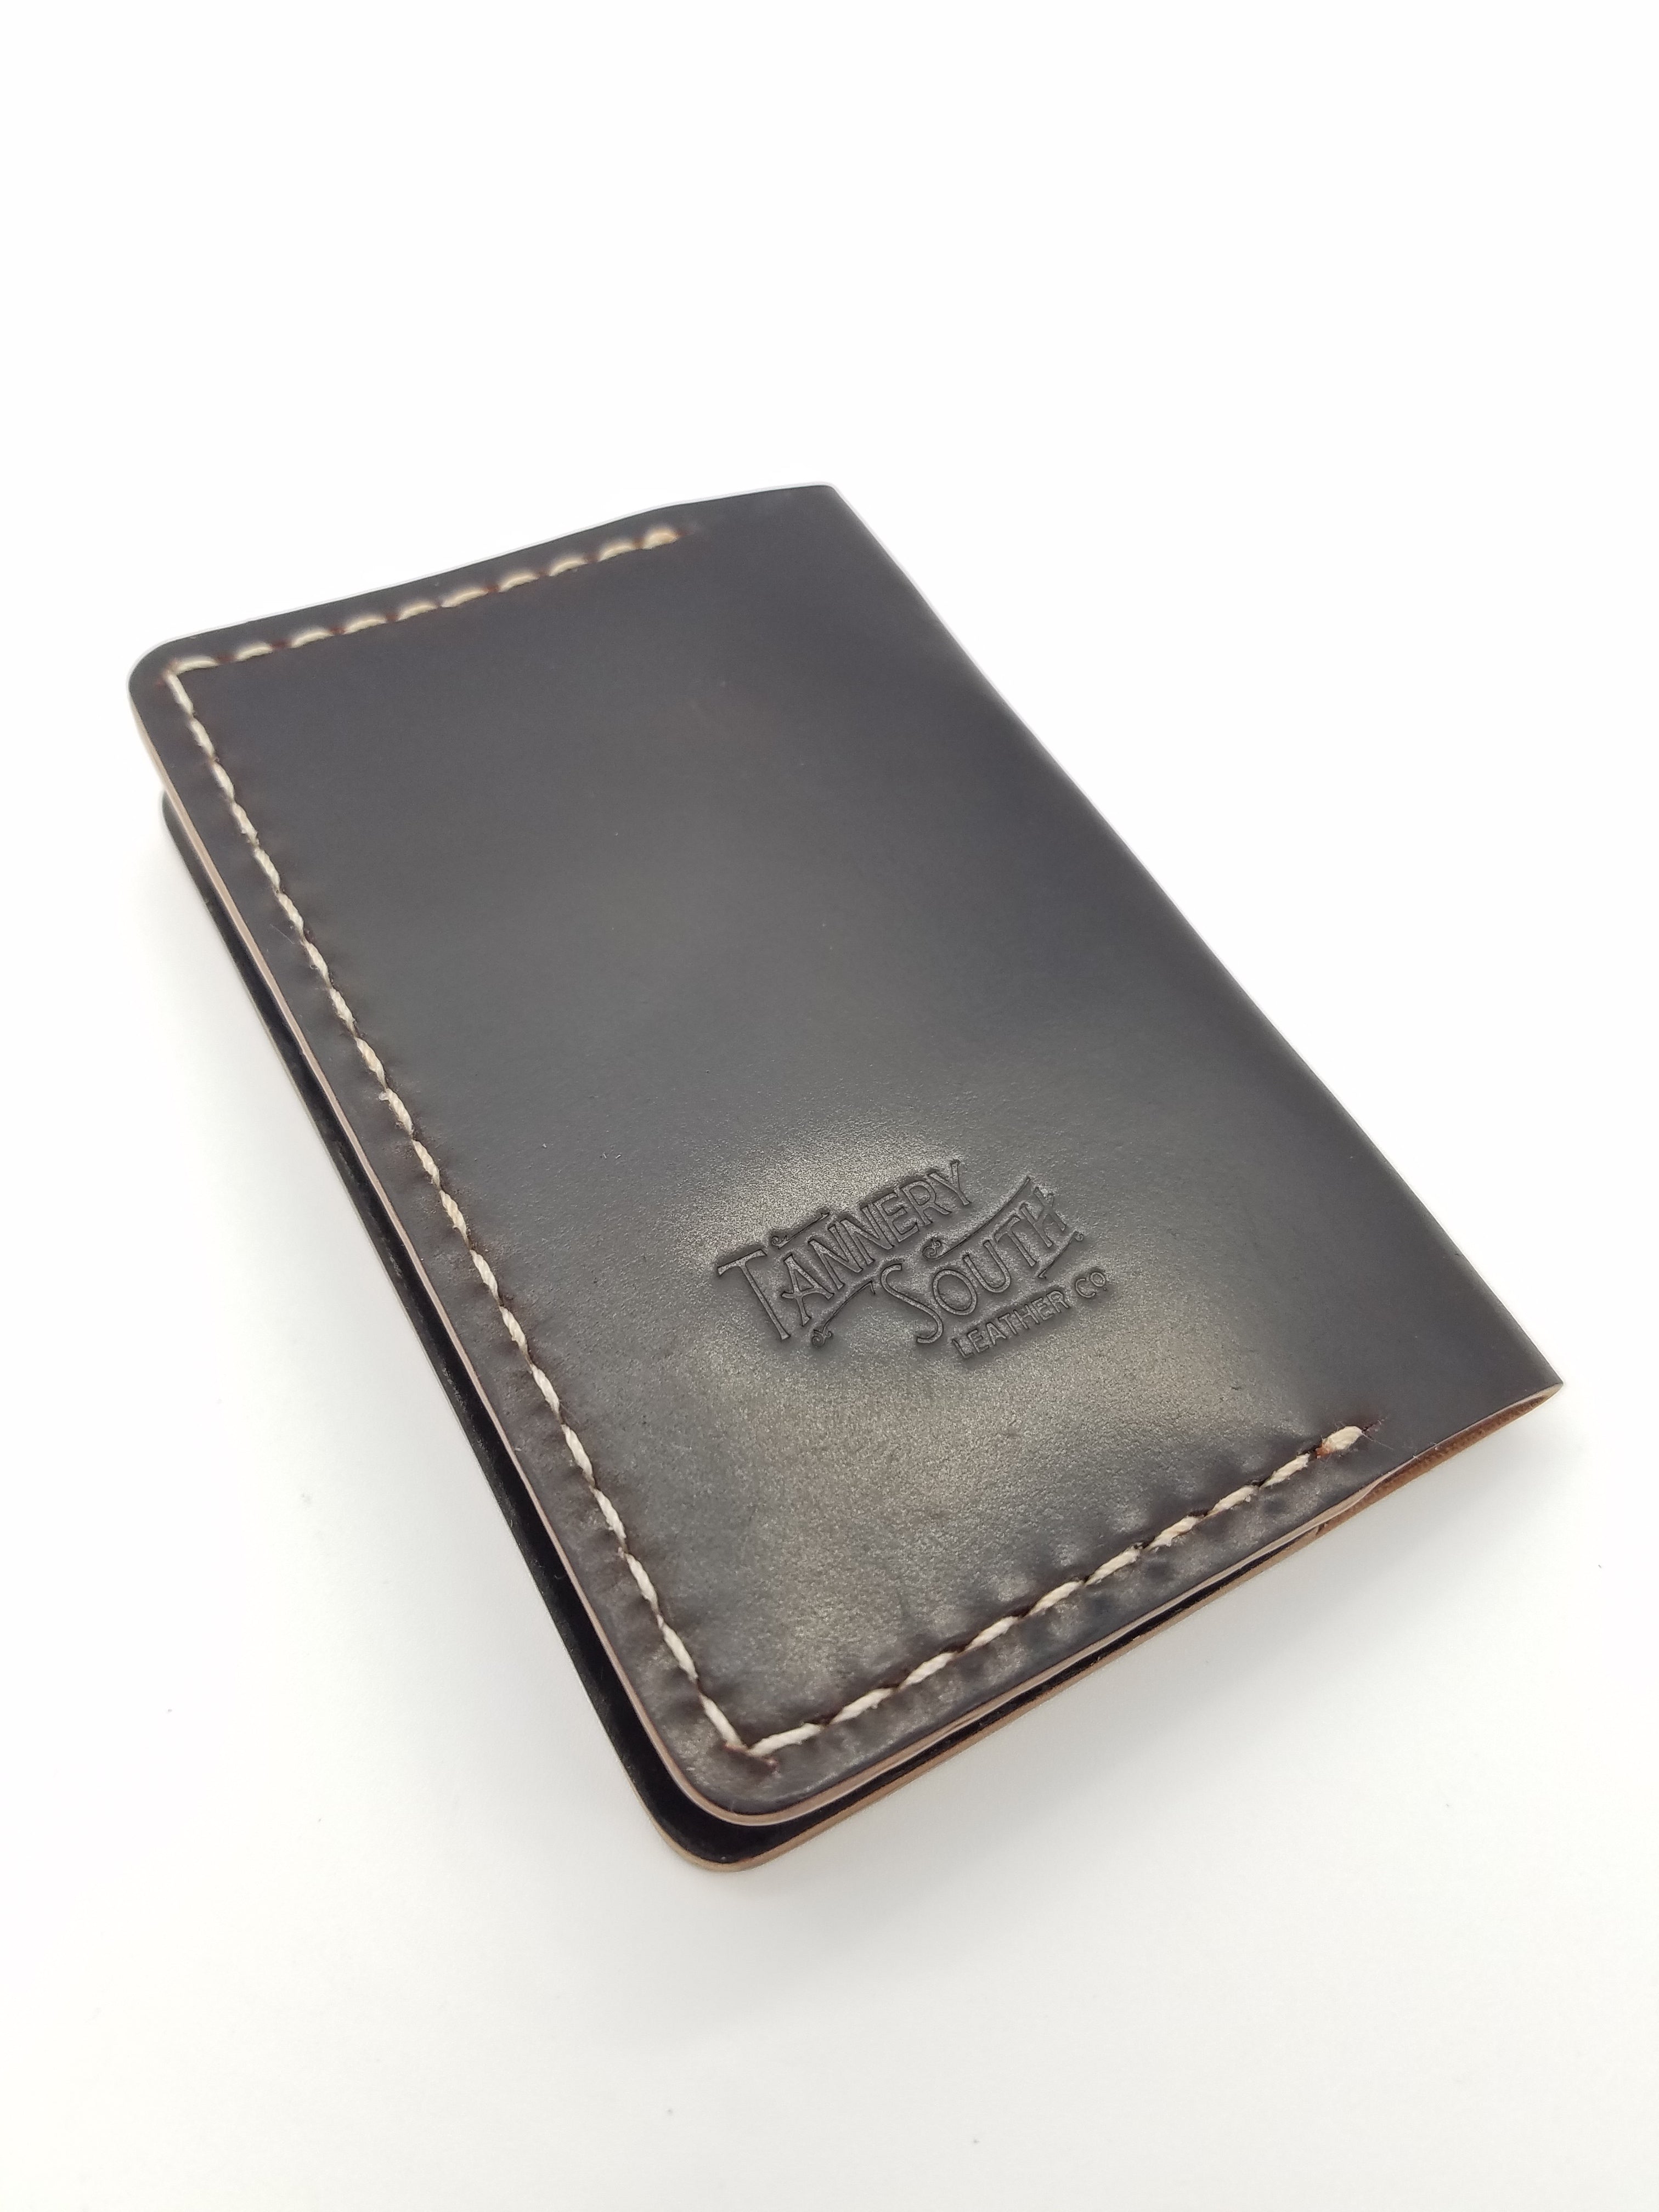 Shell Cordovan three-slot leather card holder, handmade by Buck&Hide